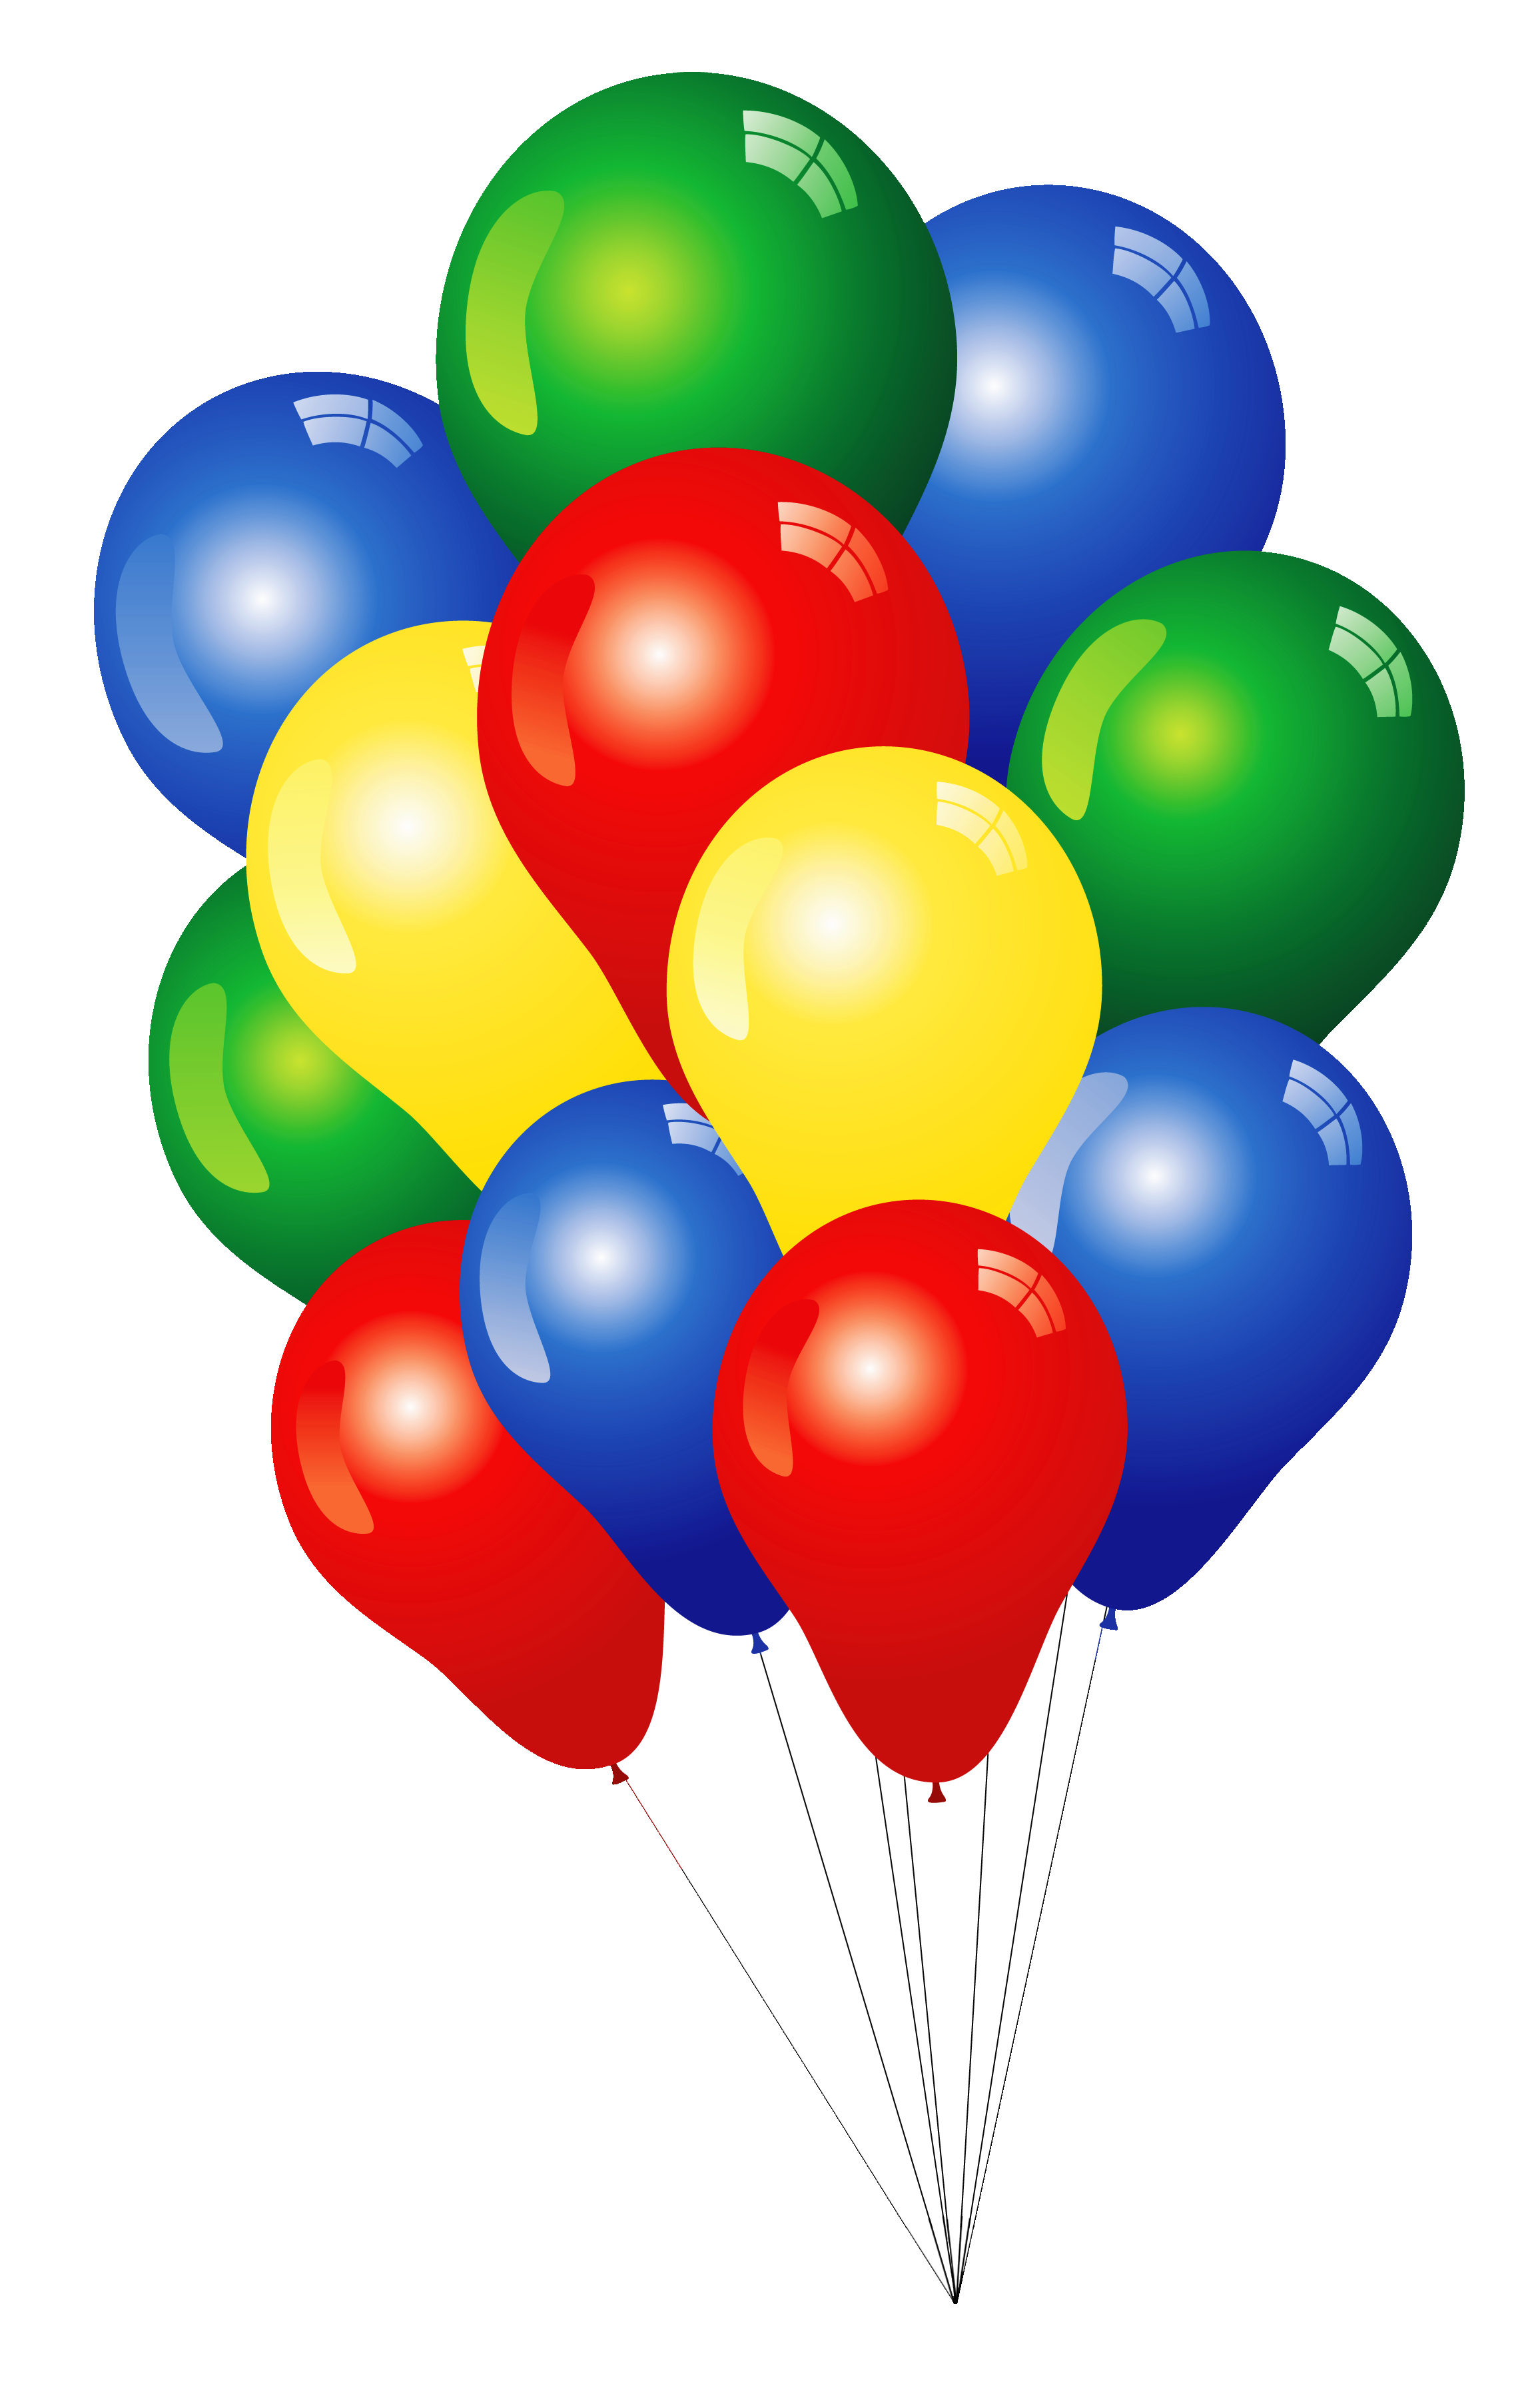 free-balloon-bundle-cliparts-download-free-balloon-bundle-cliparts-png